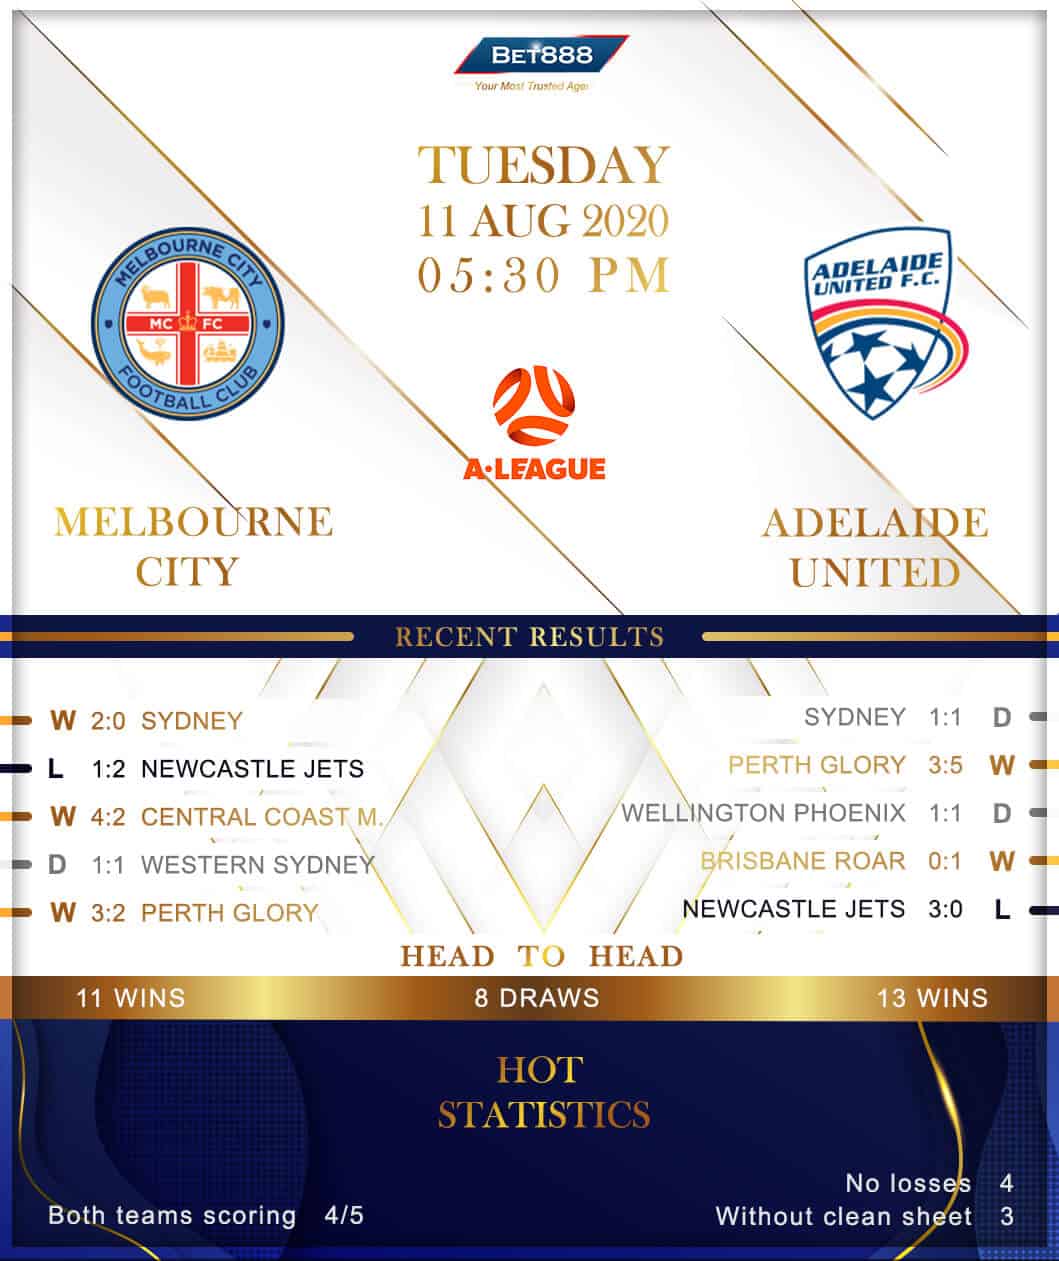 Melbourne City vs Adelaide United 11/08/20